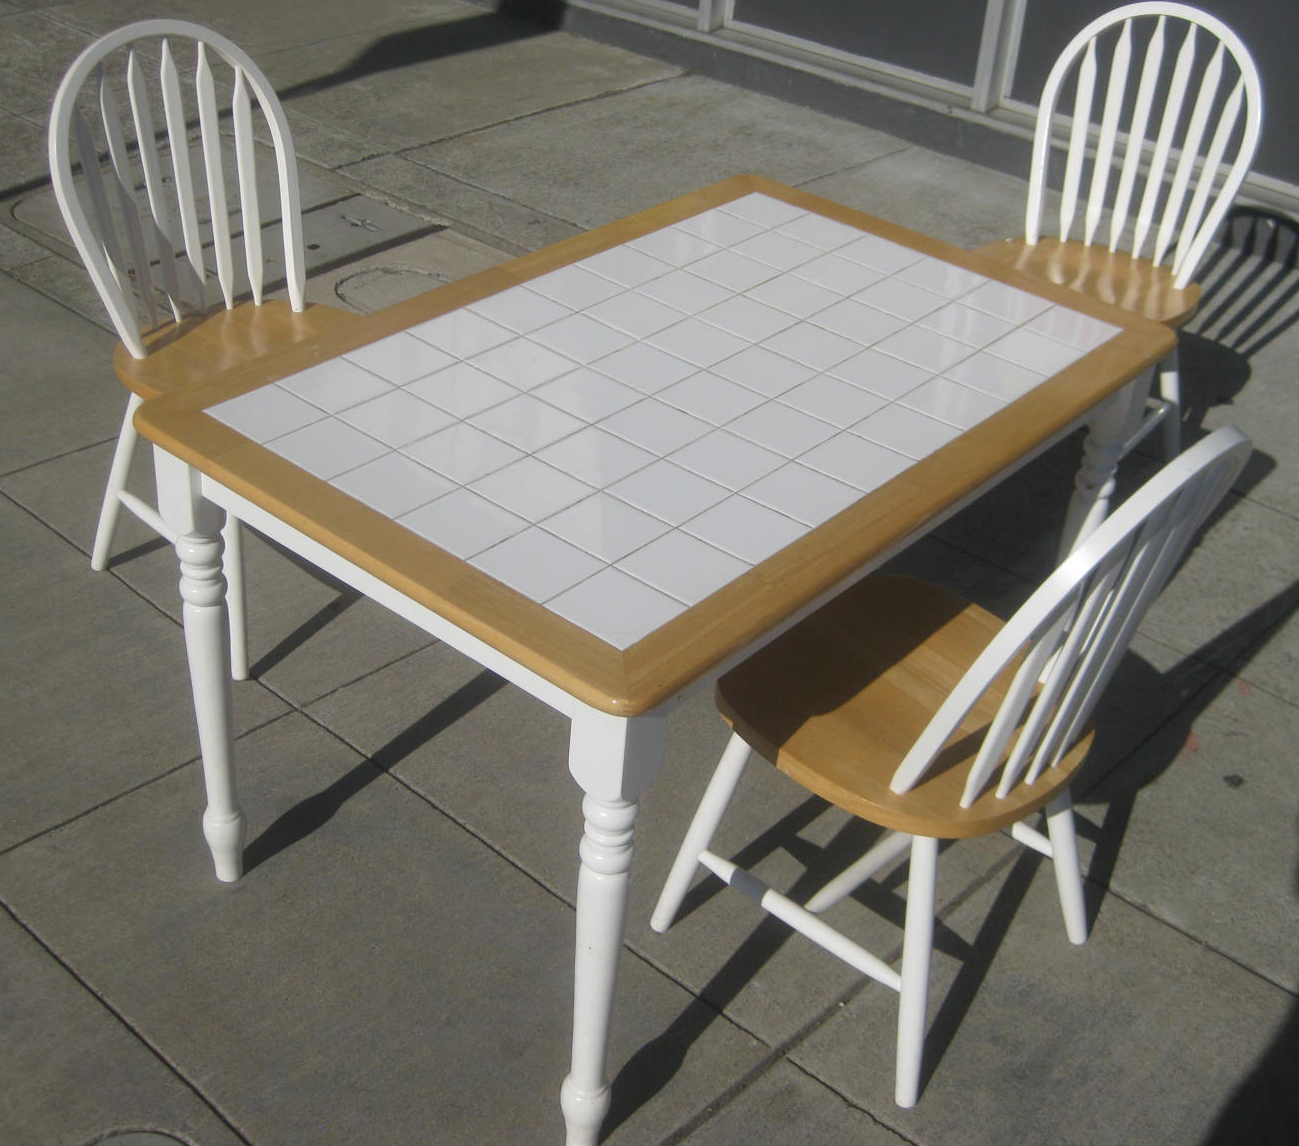  tile kitchen table